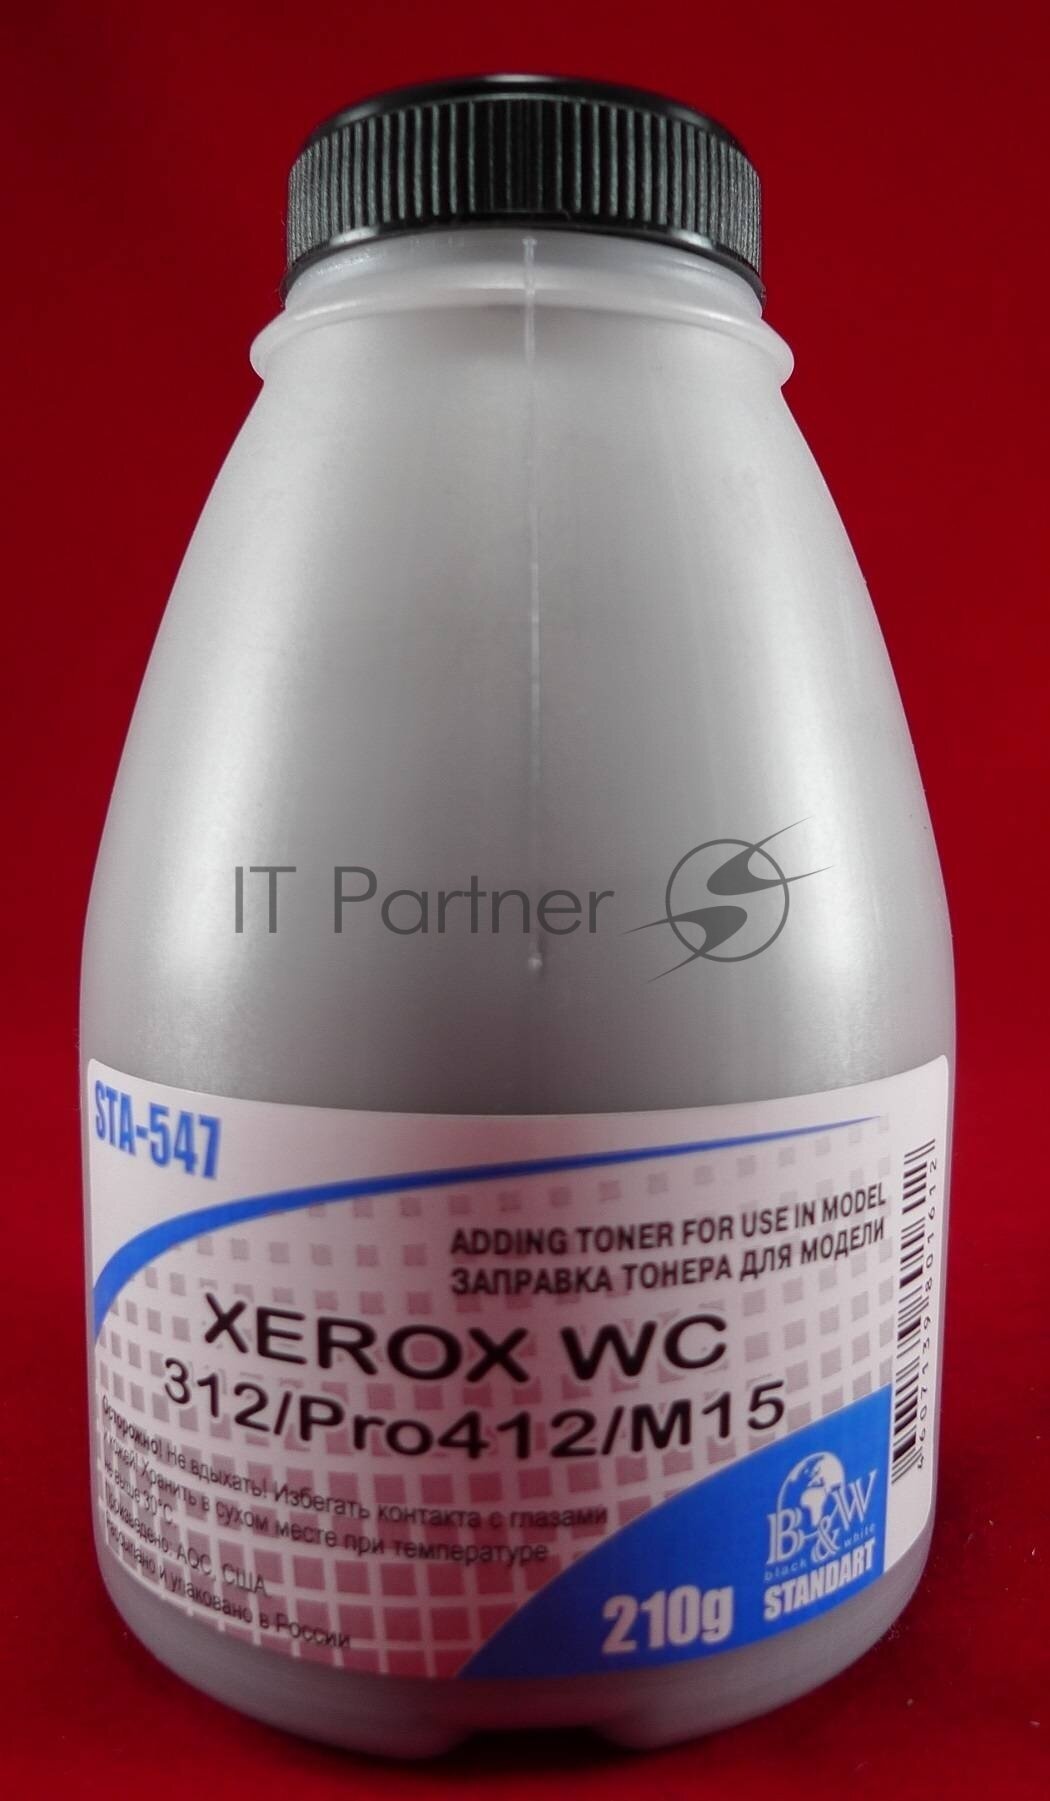 Тонер XEROX WC 312/Pro 412/M15 (фл. 210г) Black&White Standart фас. Россия